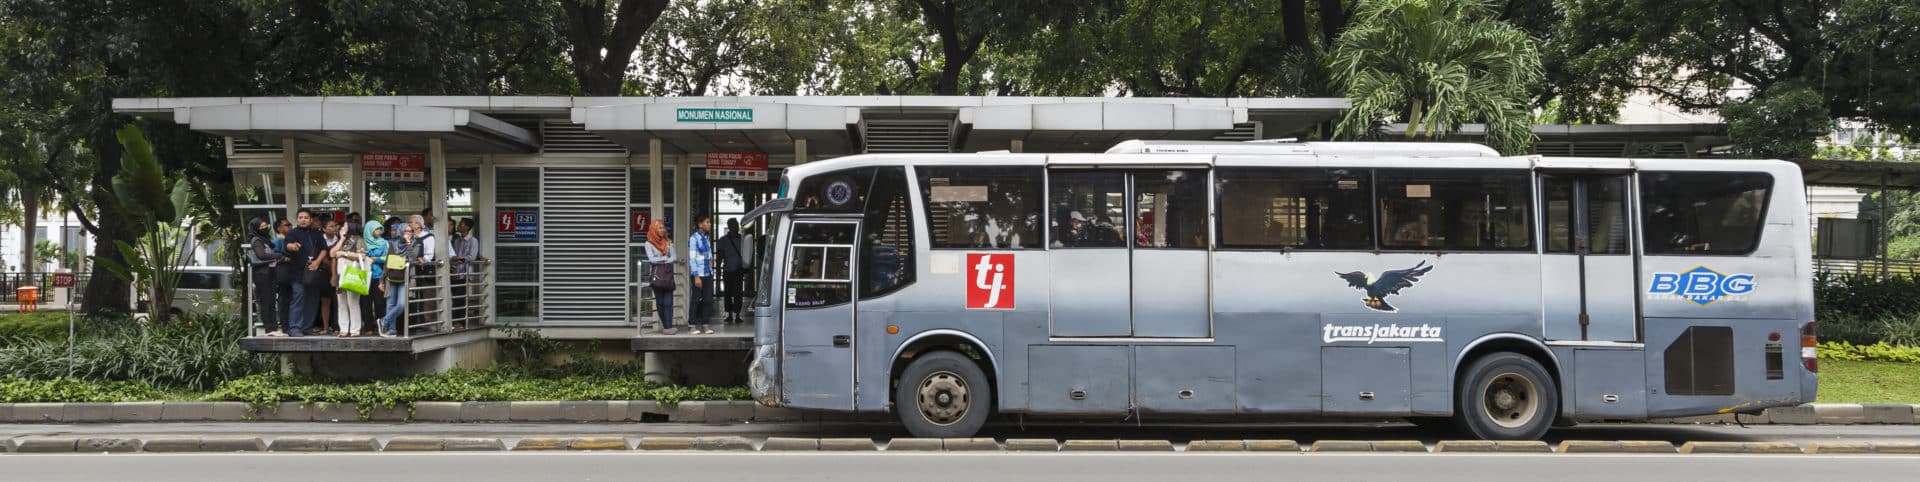 Bus in Indonesia | Transport in Indonesia | Calico Jack